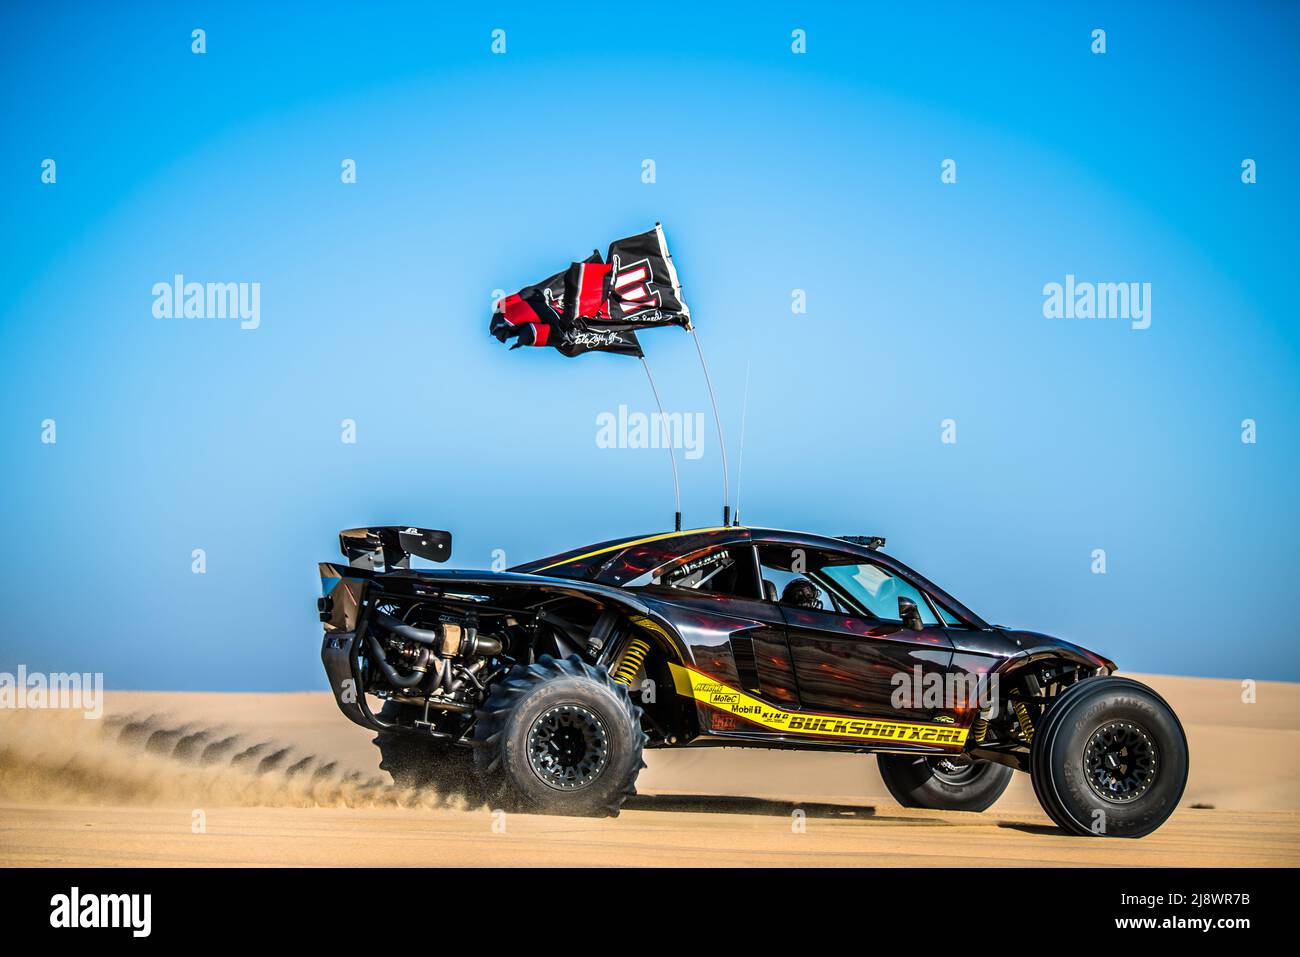 Doha, Qatar, February 23, 2018: Off road buggy car in the sand dunes of the Qatari desert. Stock Photo